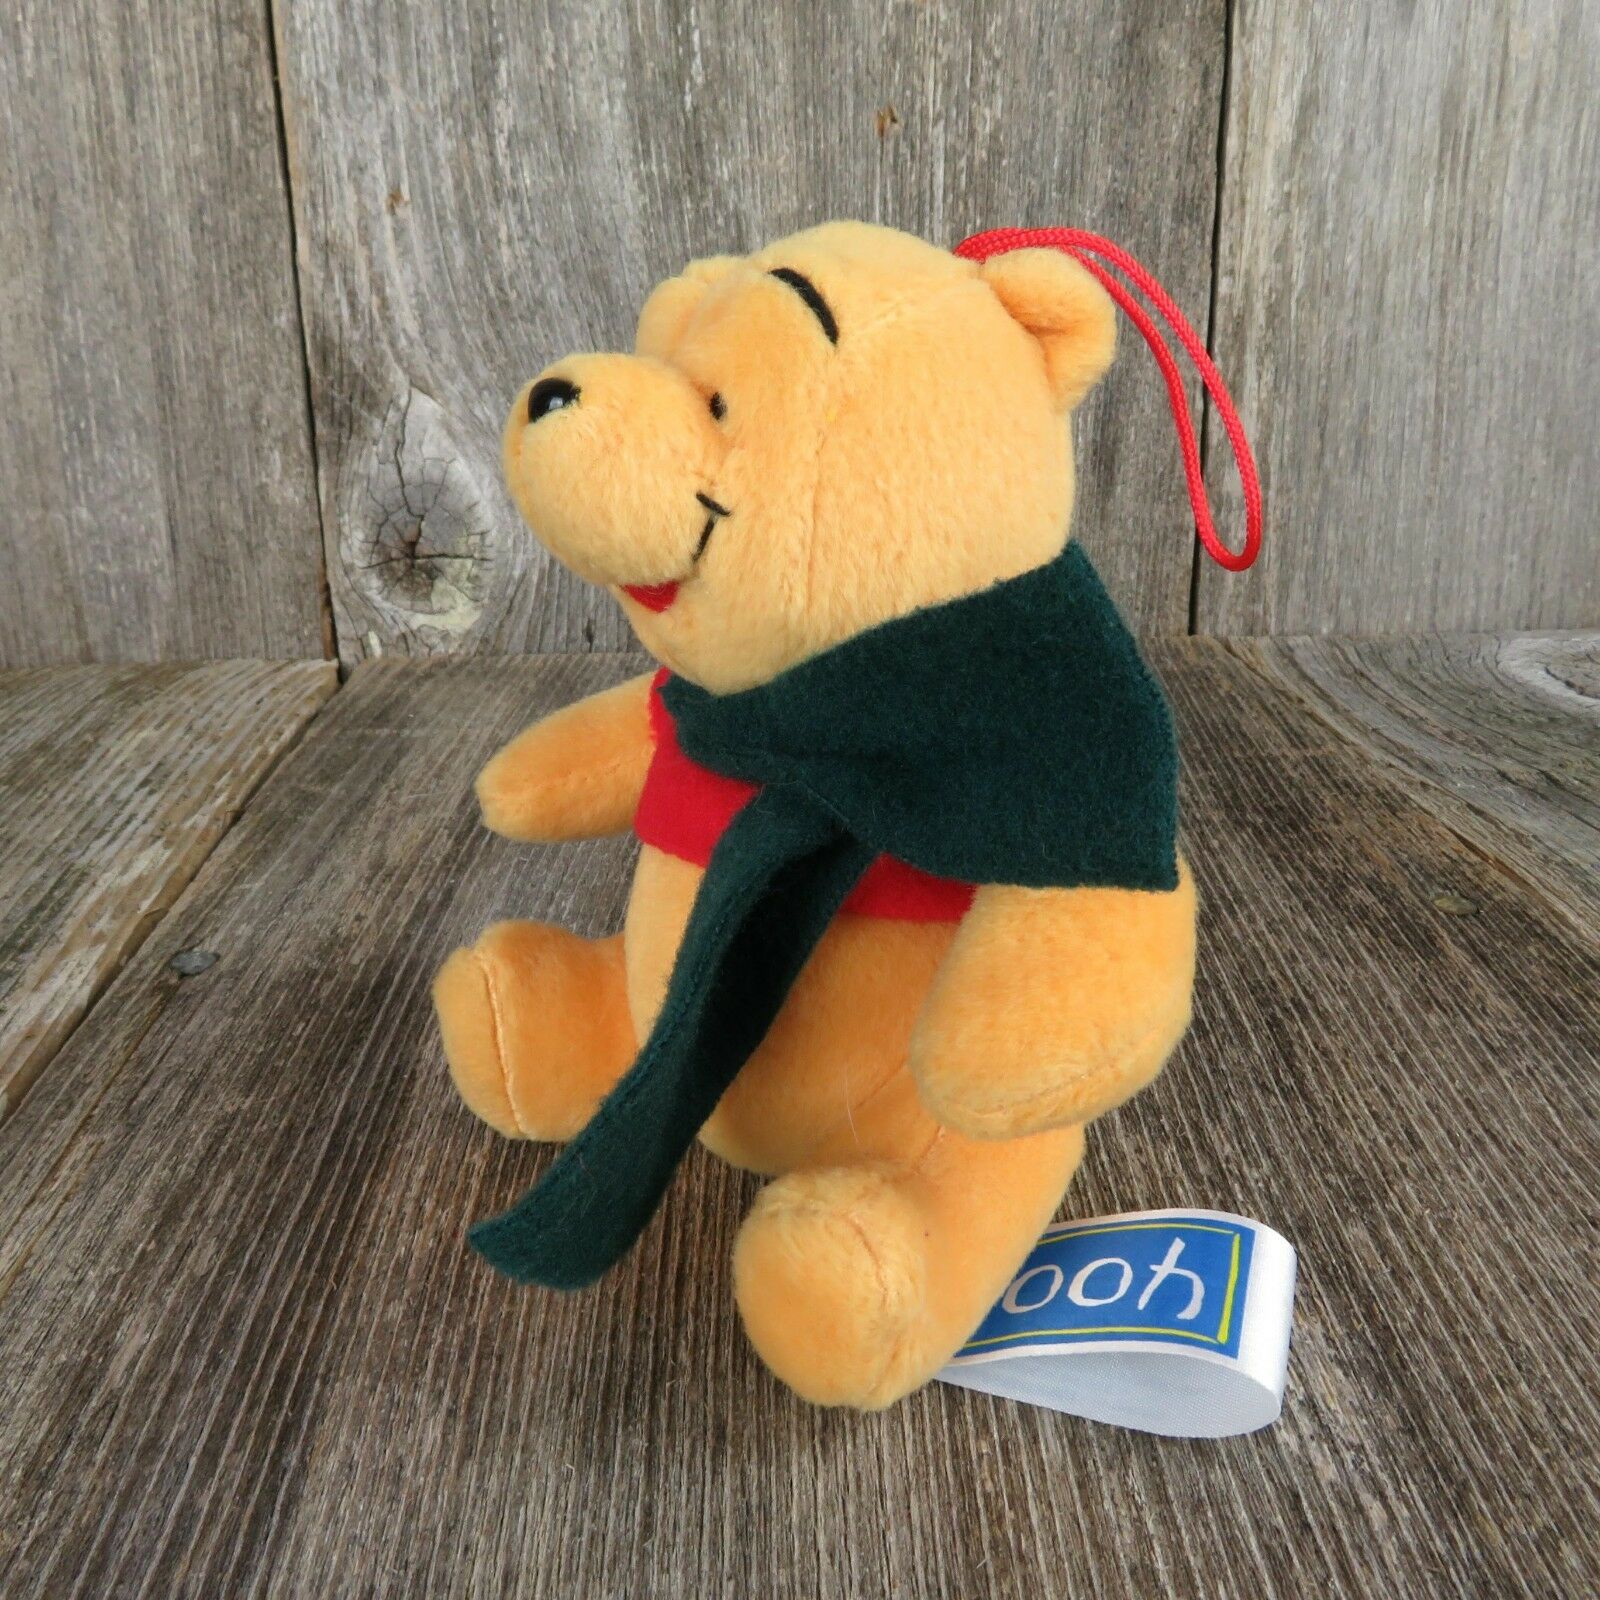 Disney Winnie the Pooh Ornament Plush Bear Stuffed Animal Christmas Scarf Teddy - At Grandma's Table